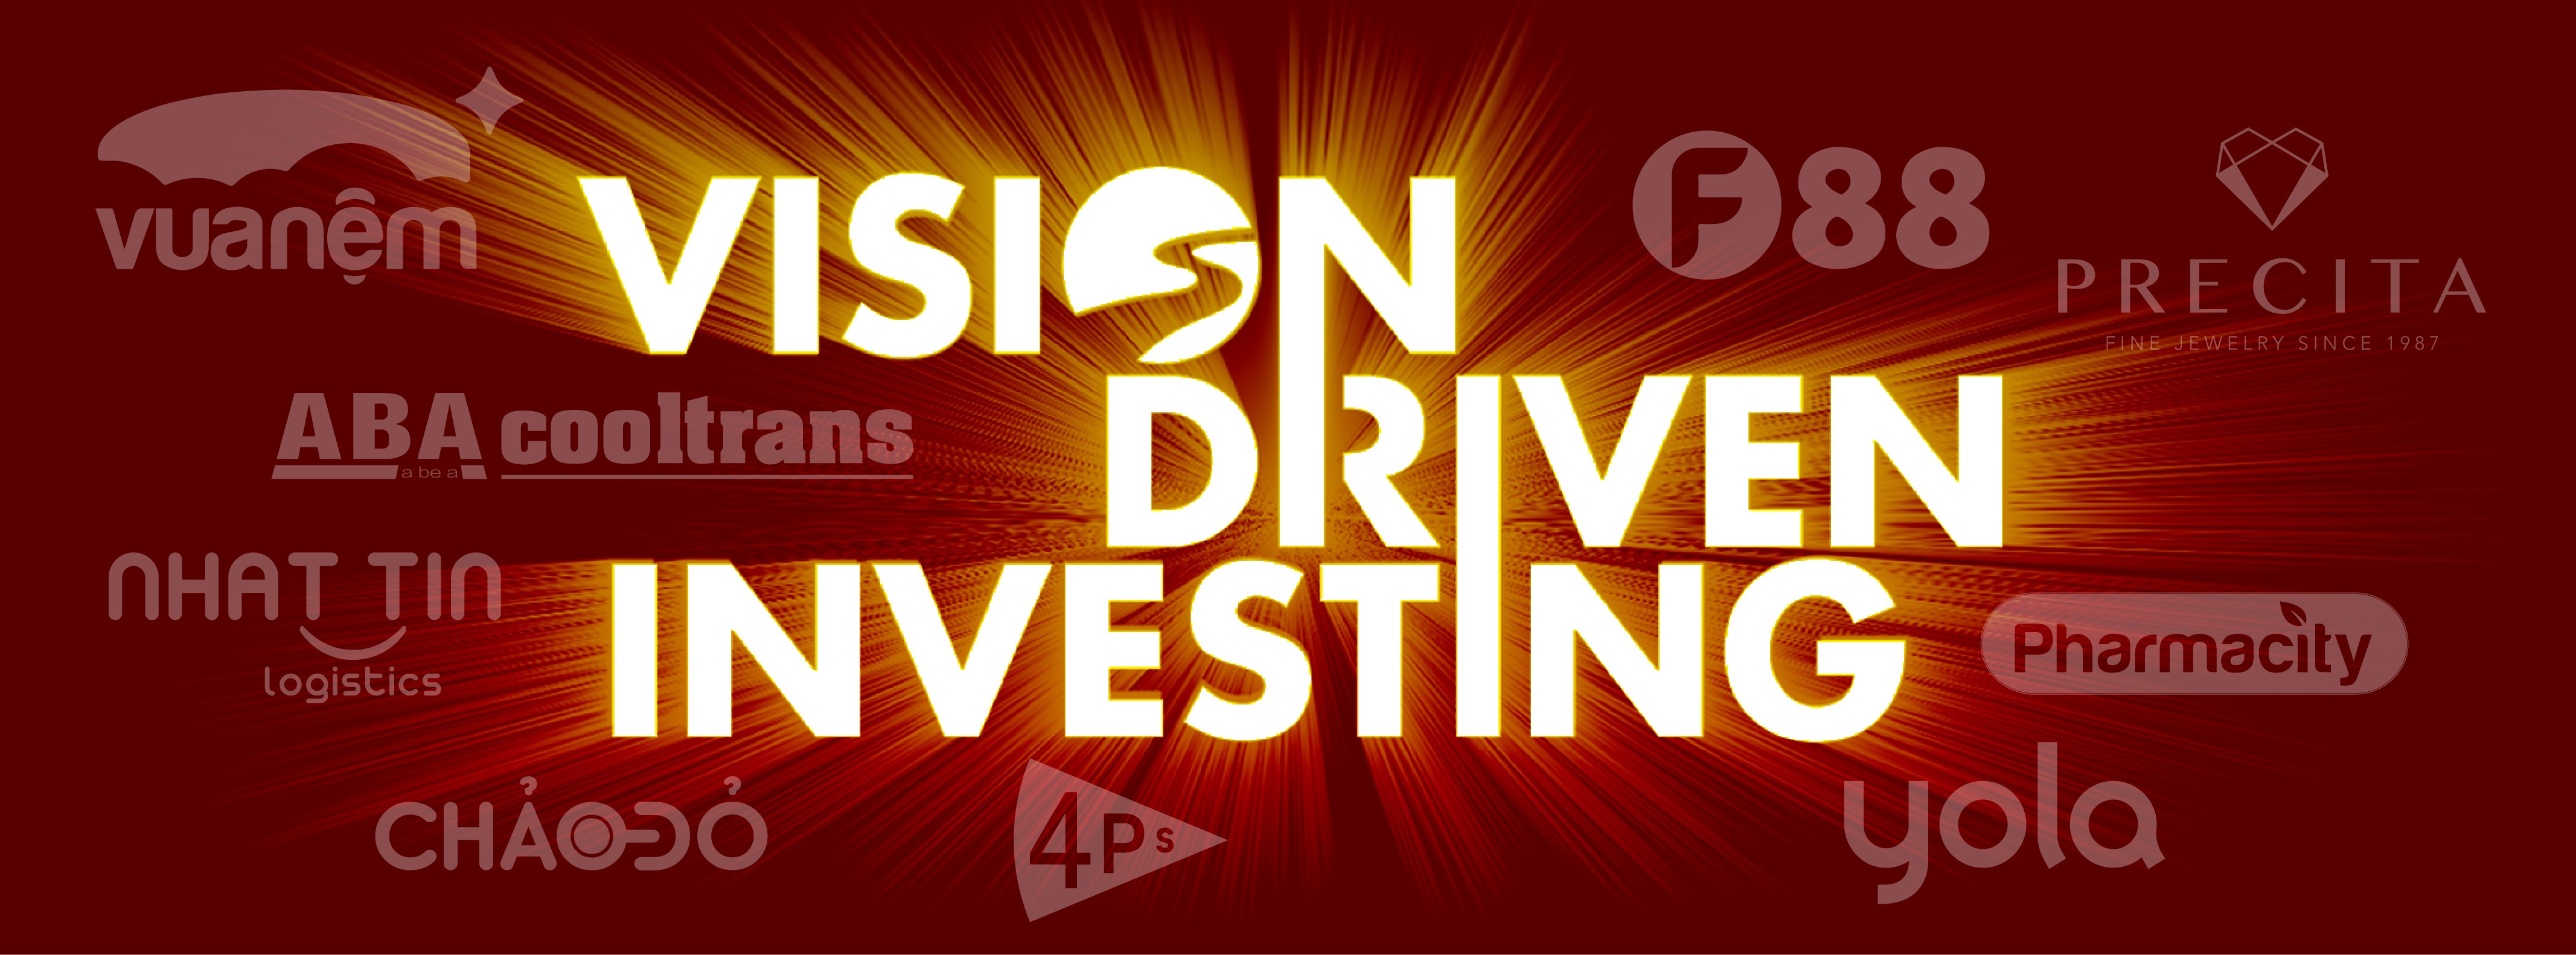 Vision driven investing long vest zara